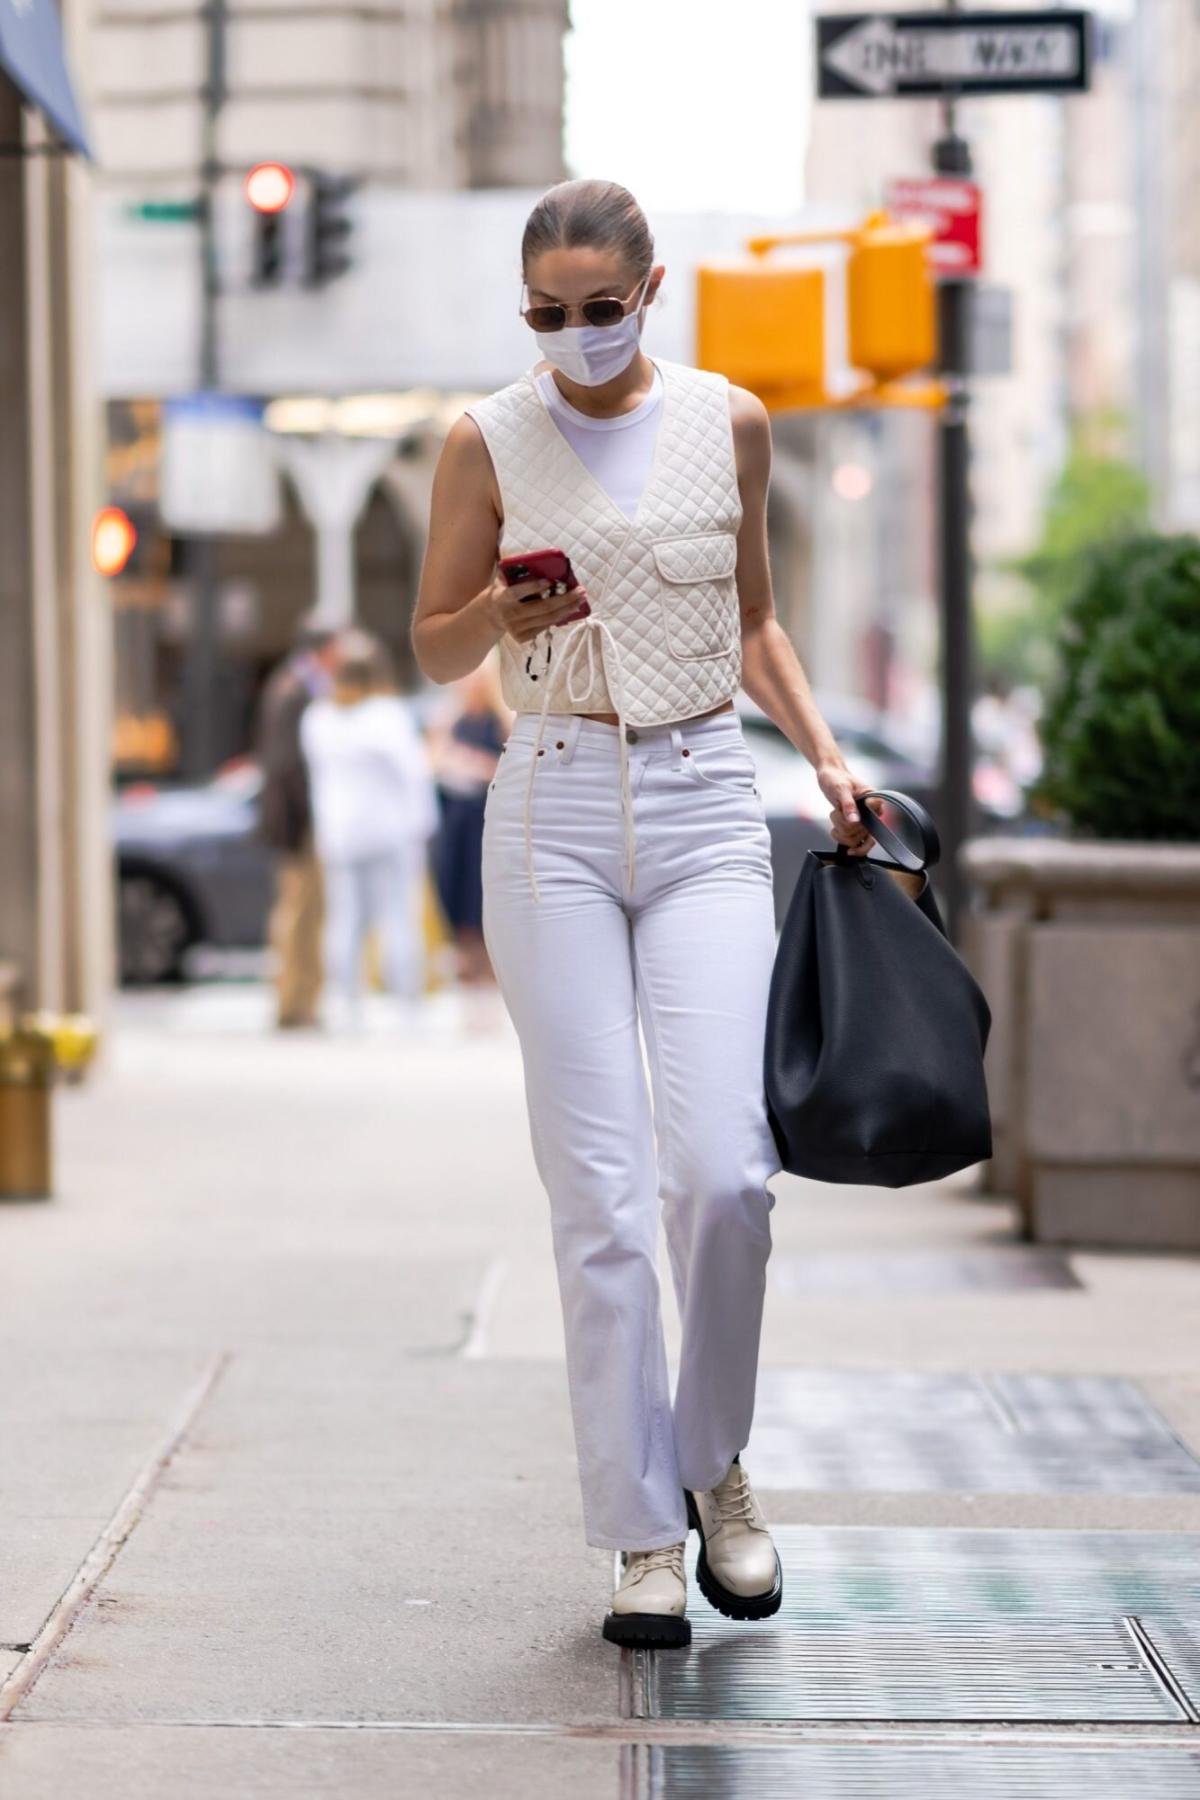 Gigi Hadid White Suit and Bear Bag